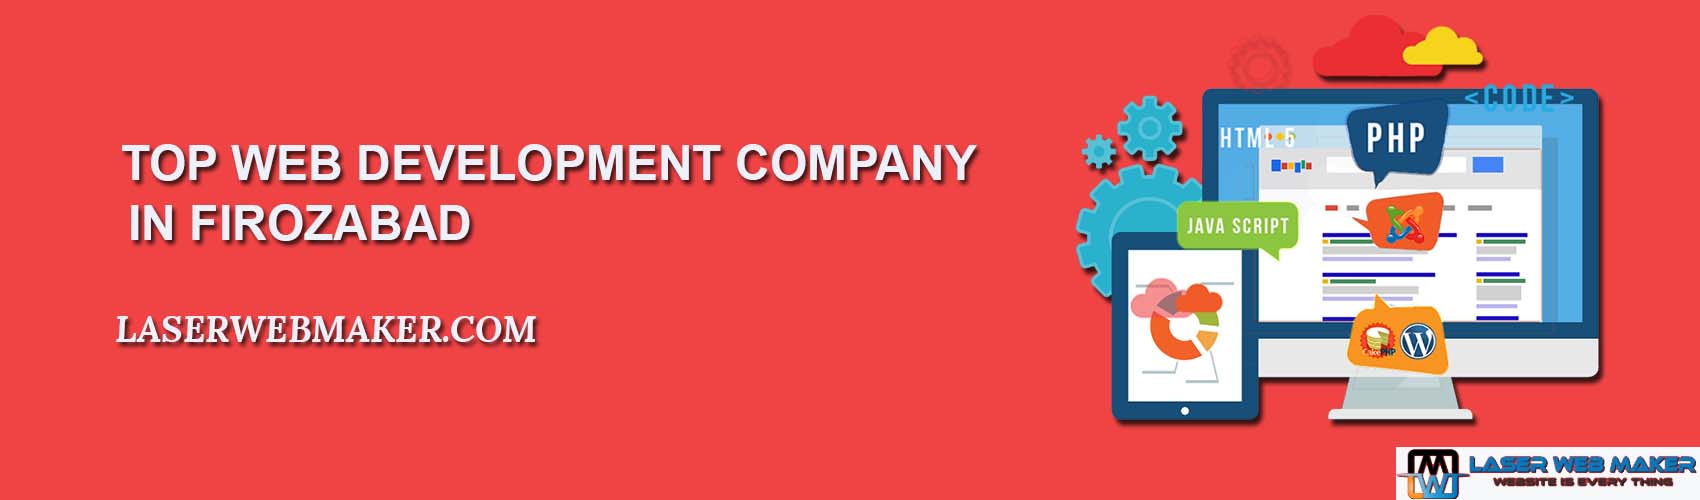 Top Web Development Company In Firozabad